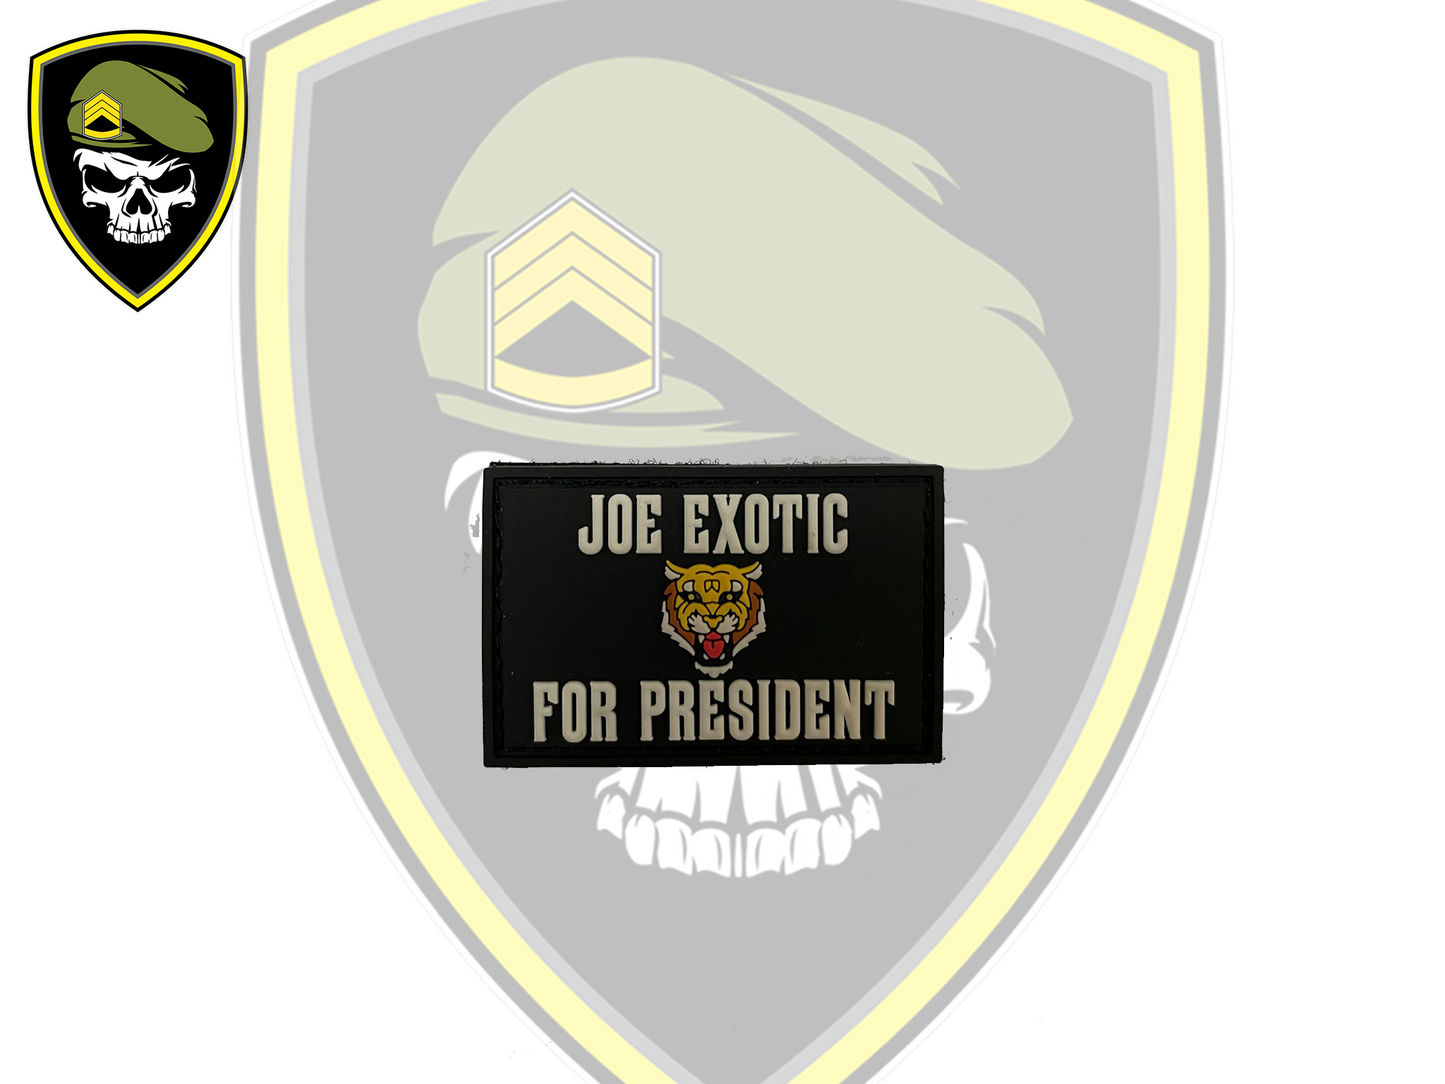 Joe Exotic for President Velcro Patch - Command Elite Hobbies